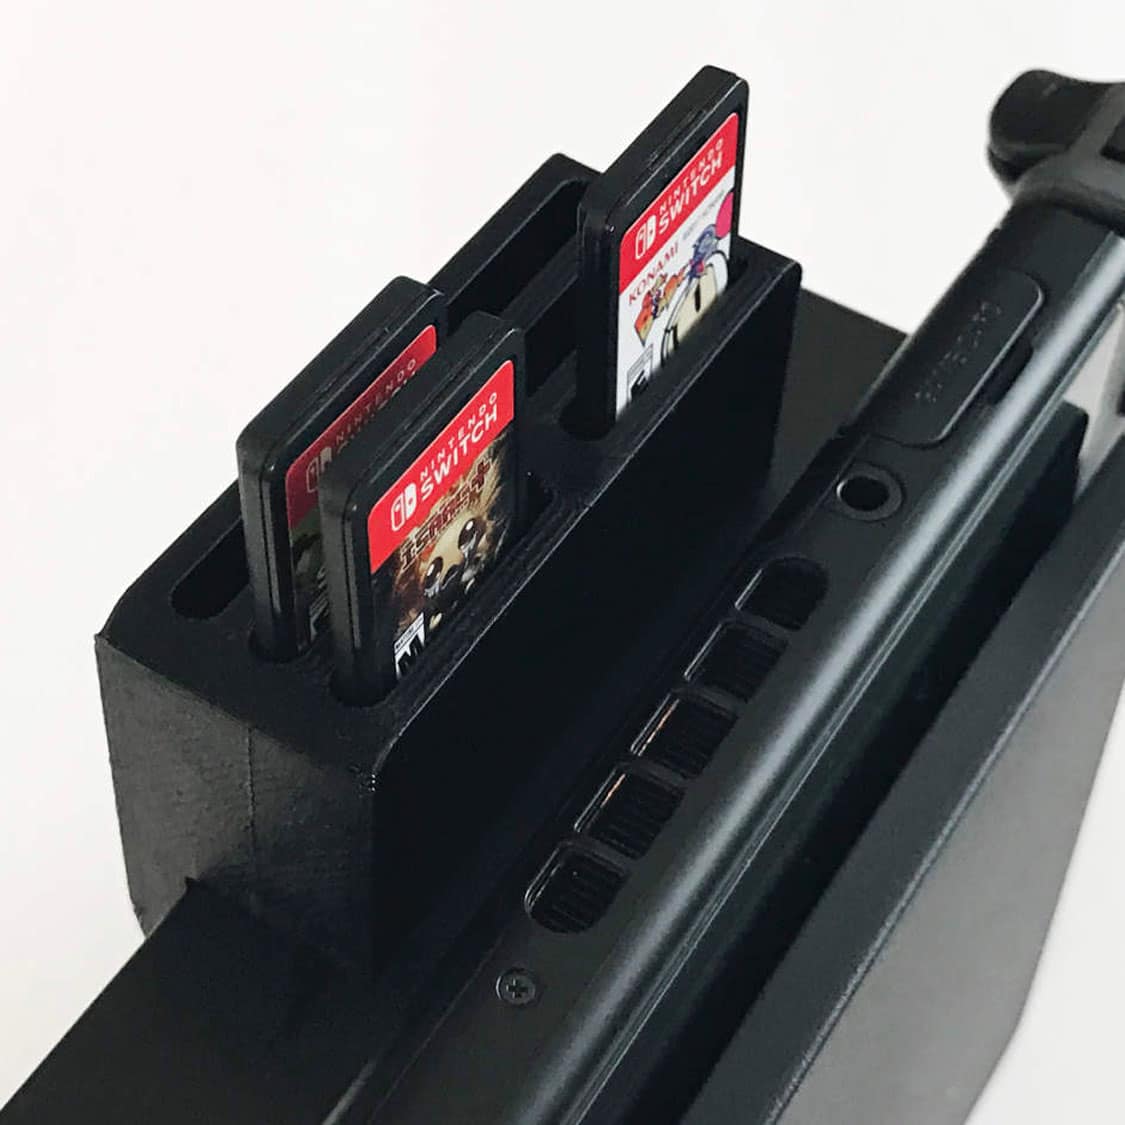 nintendo switch game cartridge holder